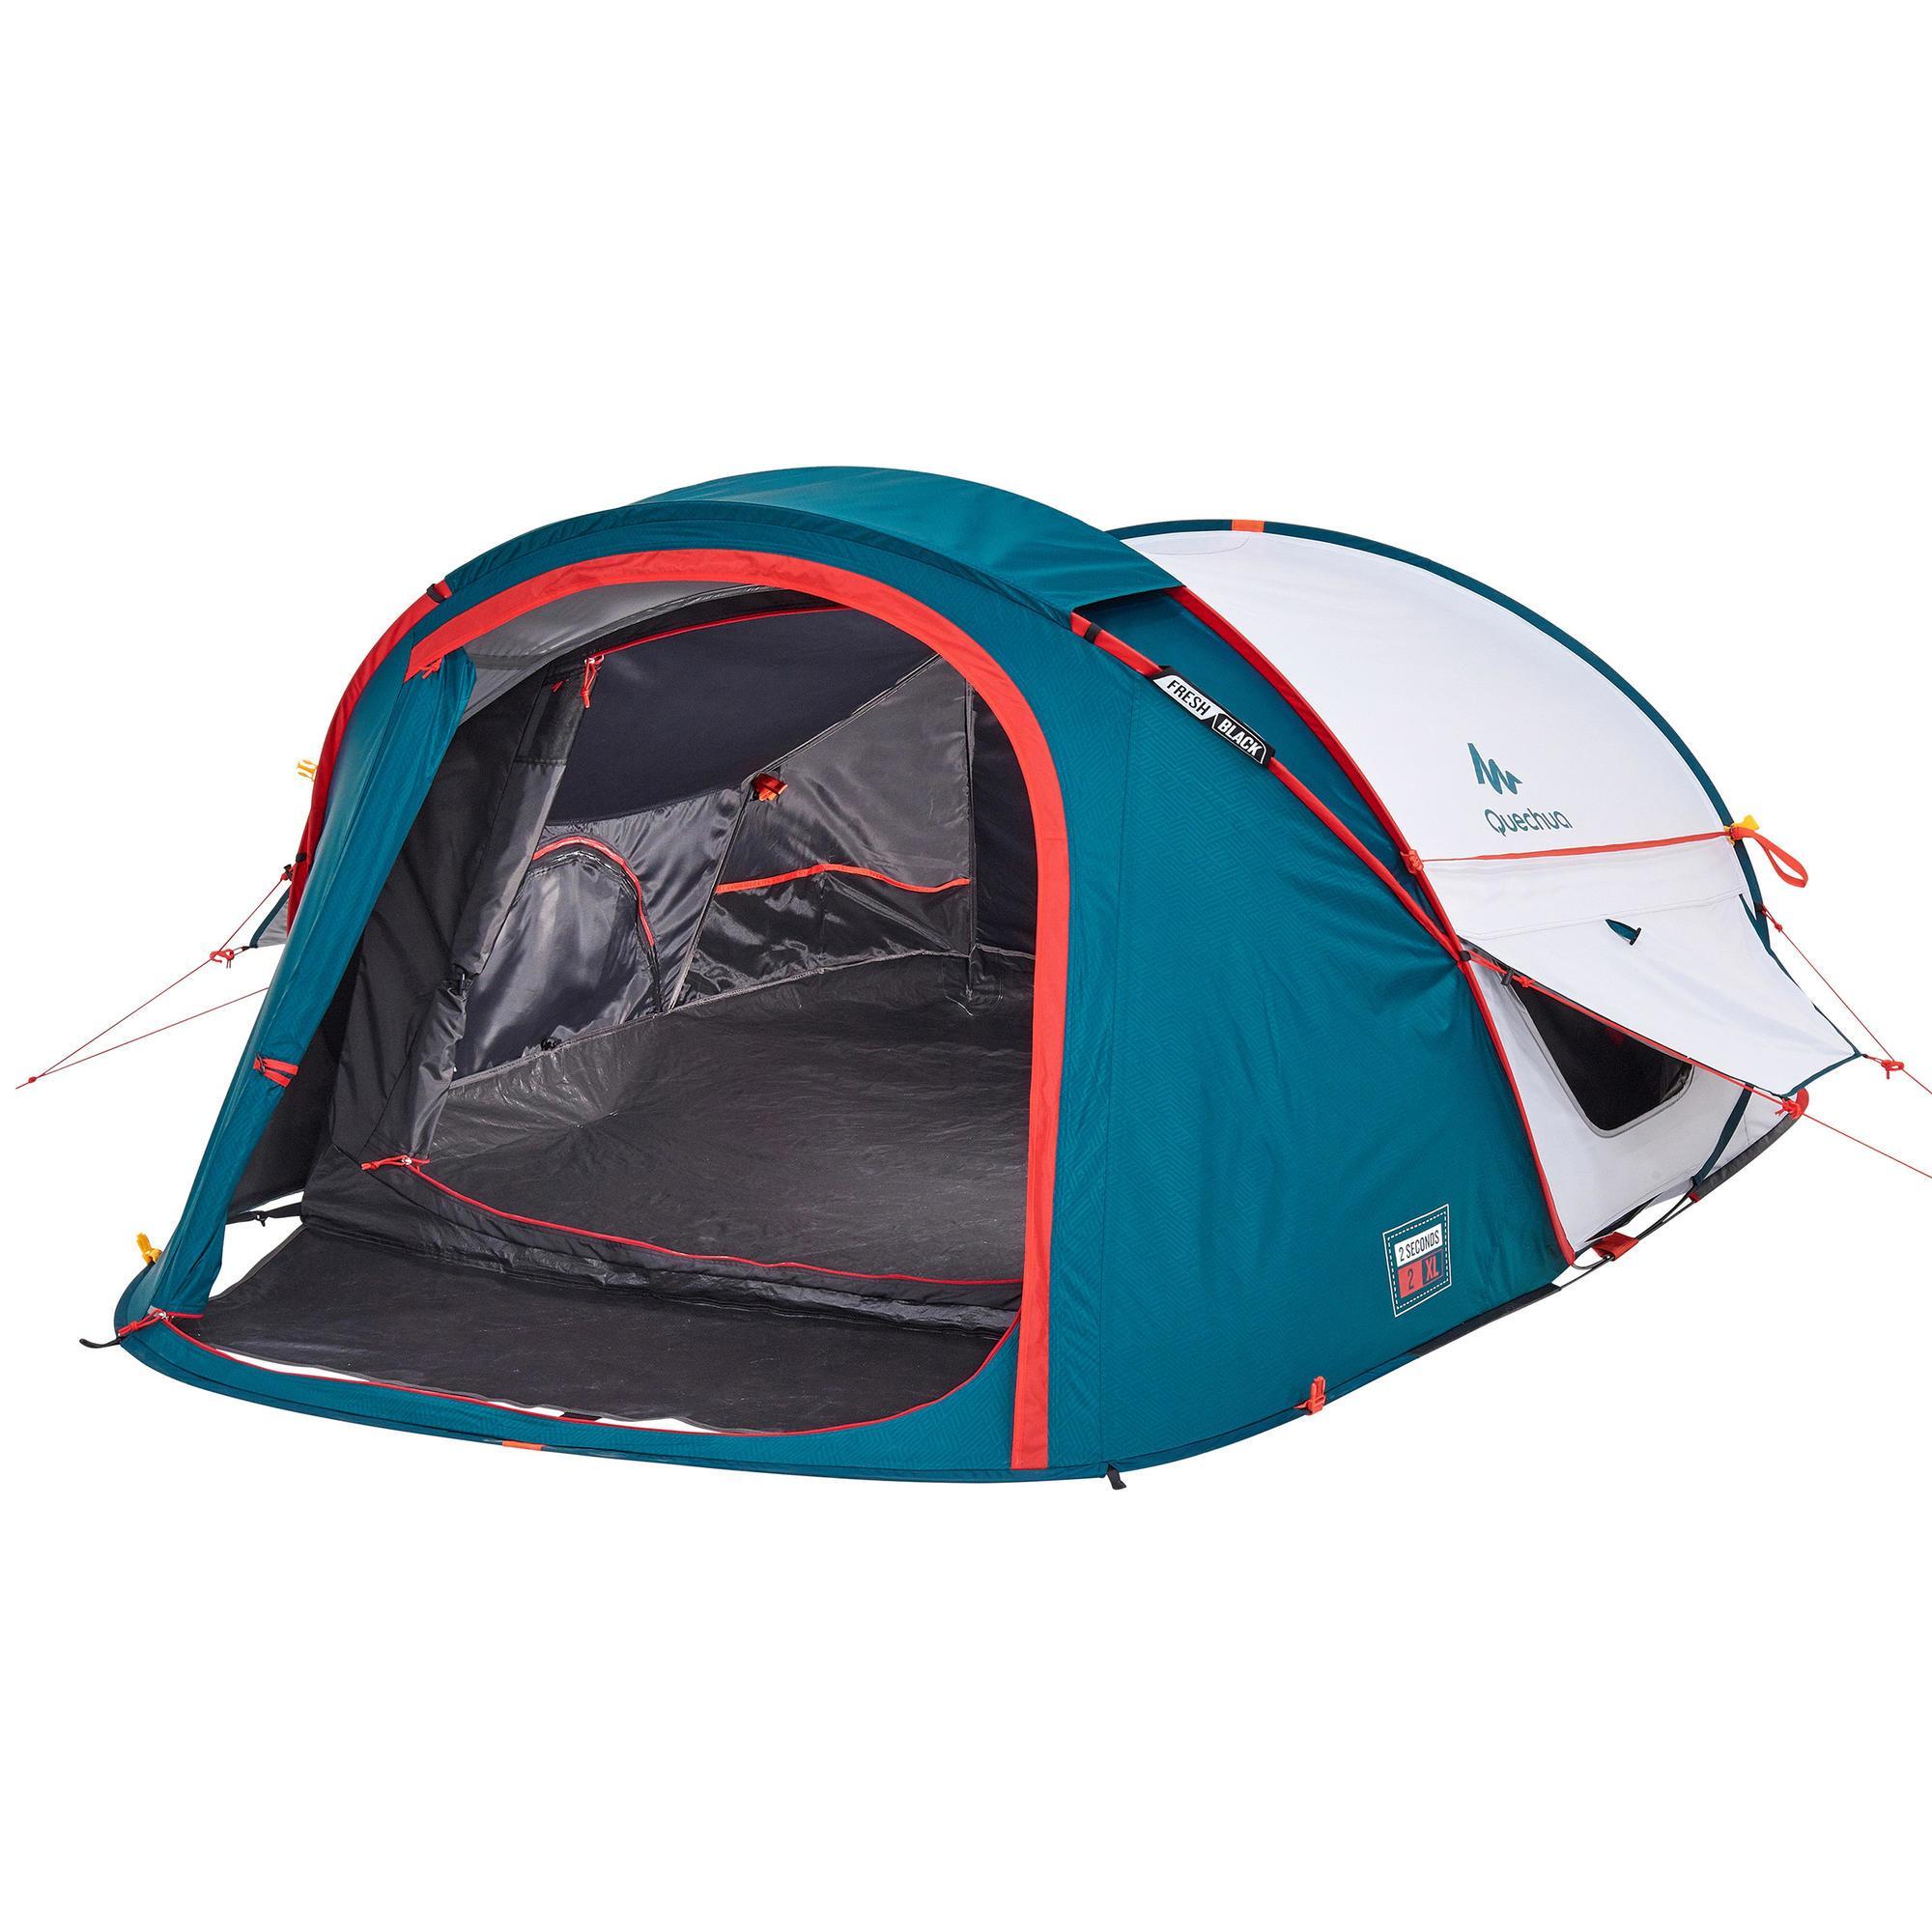 Cort camping 2 SECONDS XL FRESH&BLACK 2 persoane La Oferta Online decathlon imagine La Oferta Online